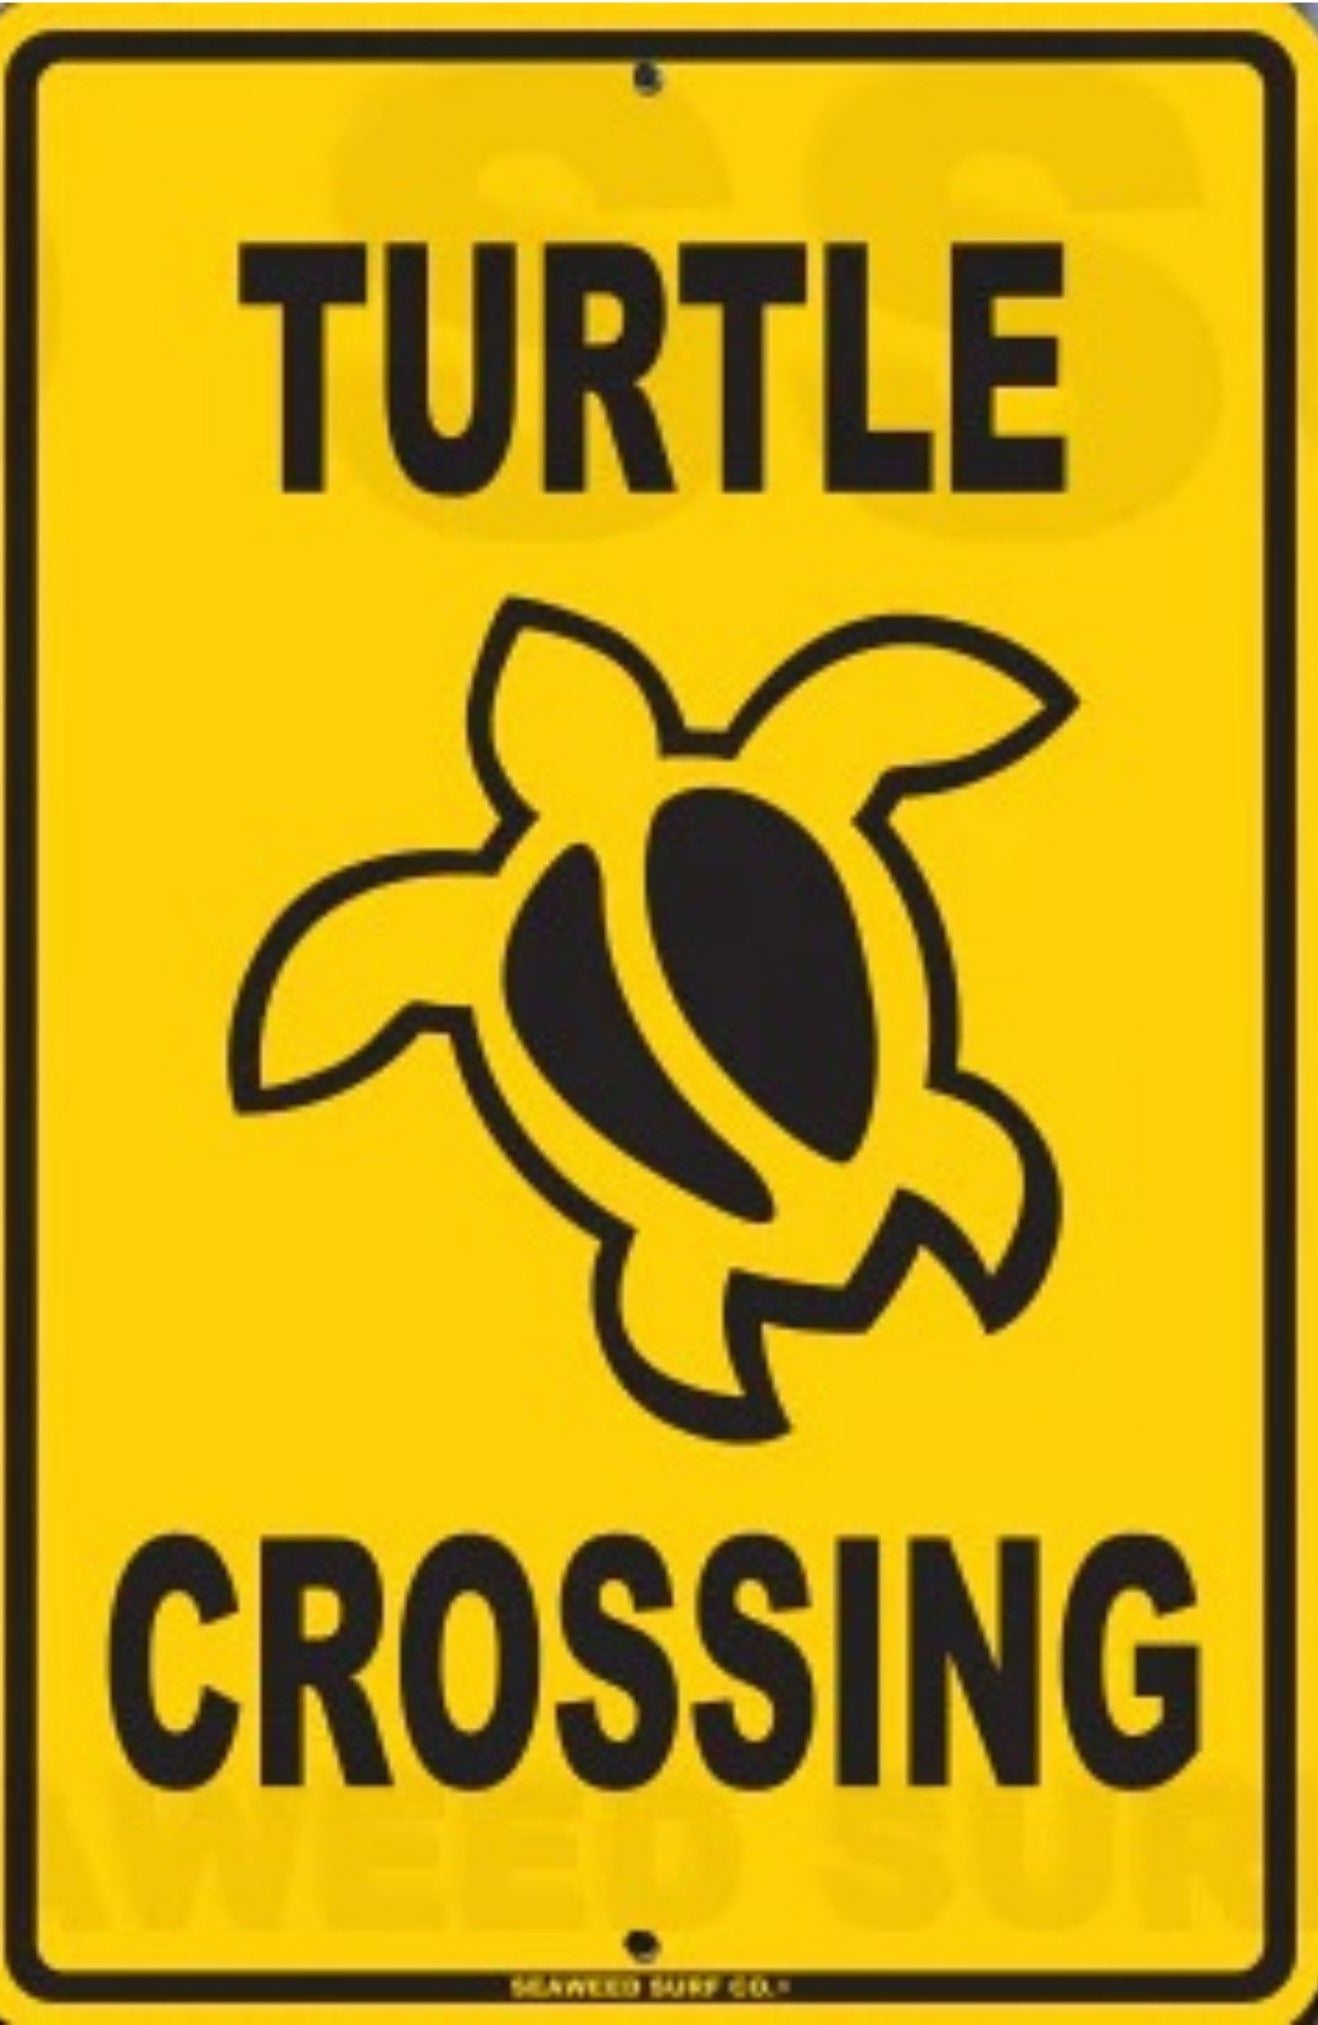 Turtle Crossing Aluminum Metal Poster Sign 12x18